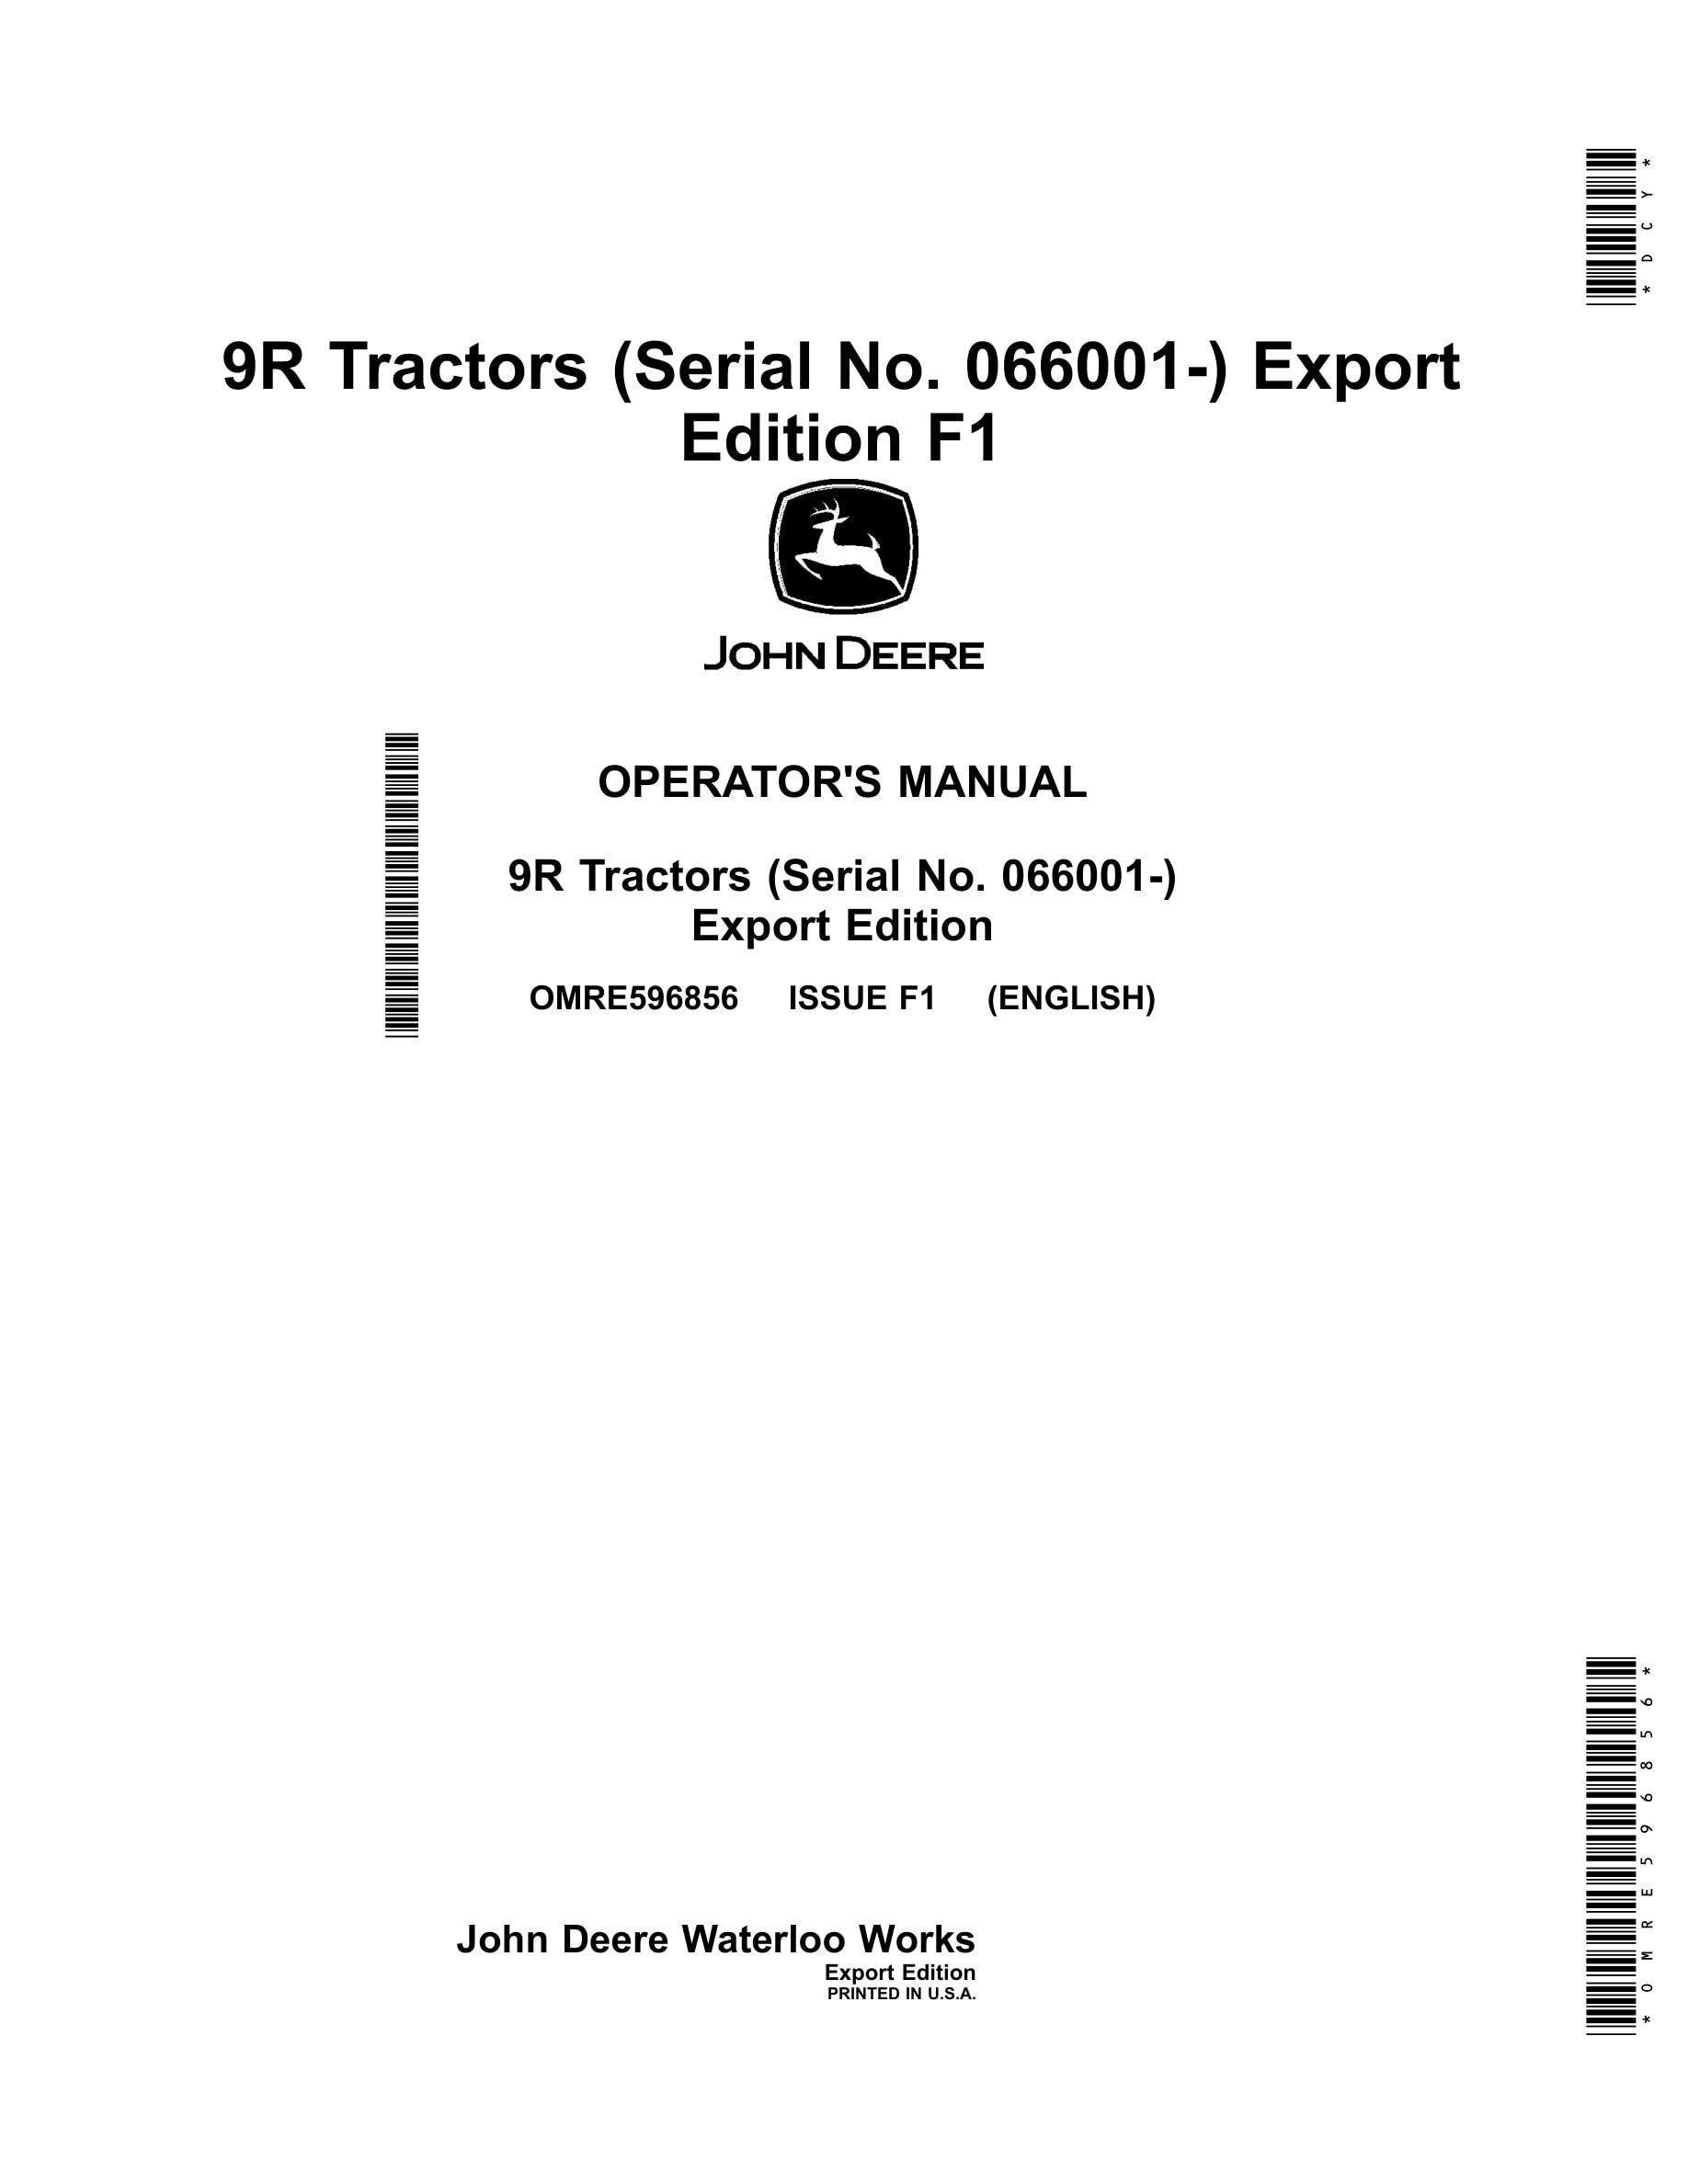 John Deere 9r Tractors Operator Manuals OMRE596856-1